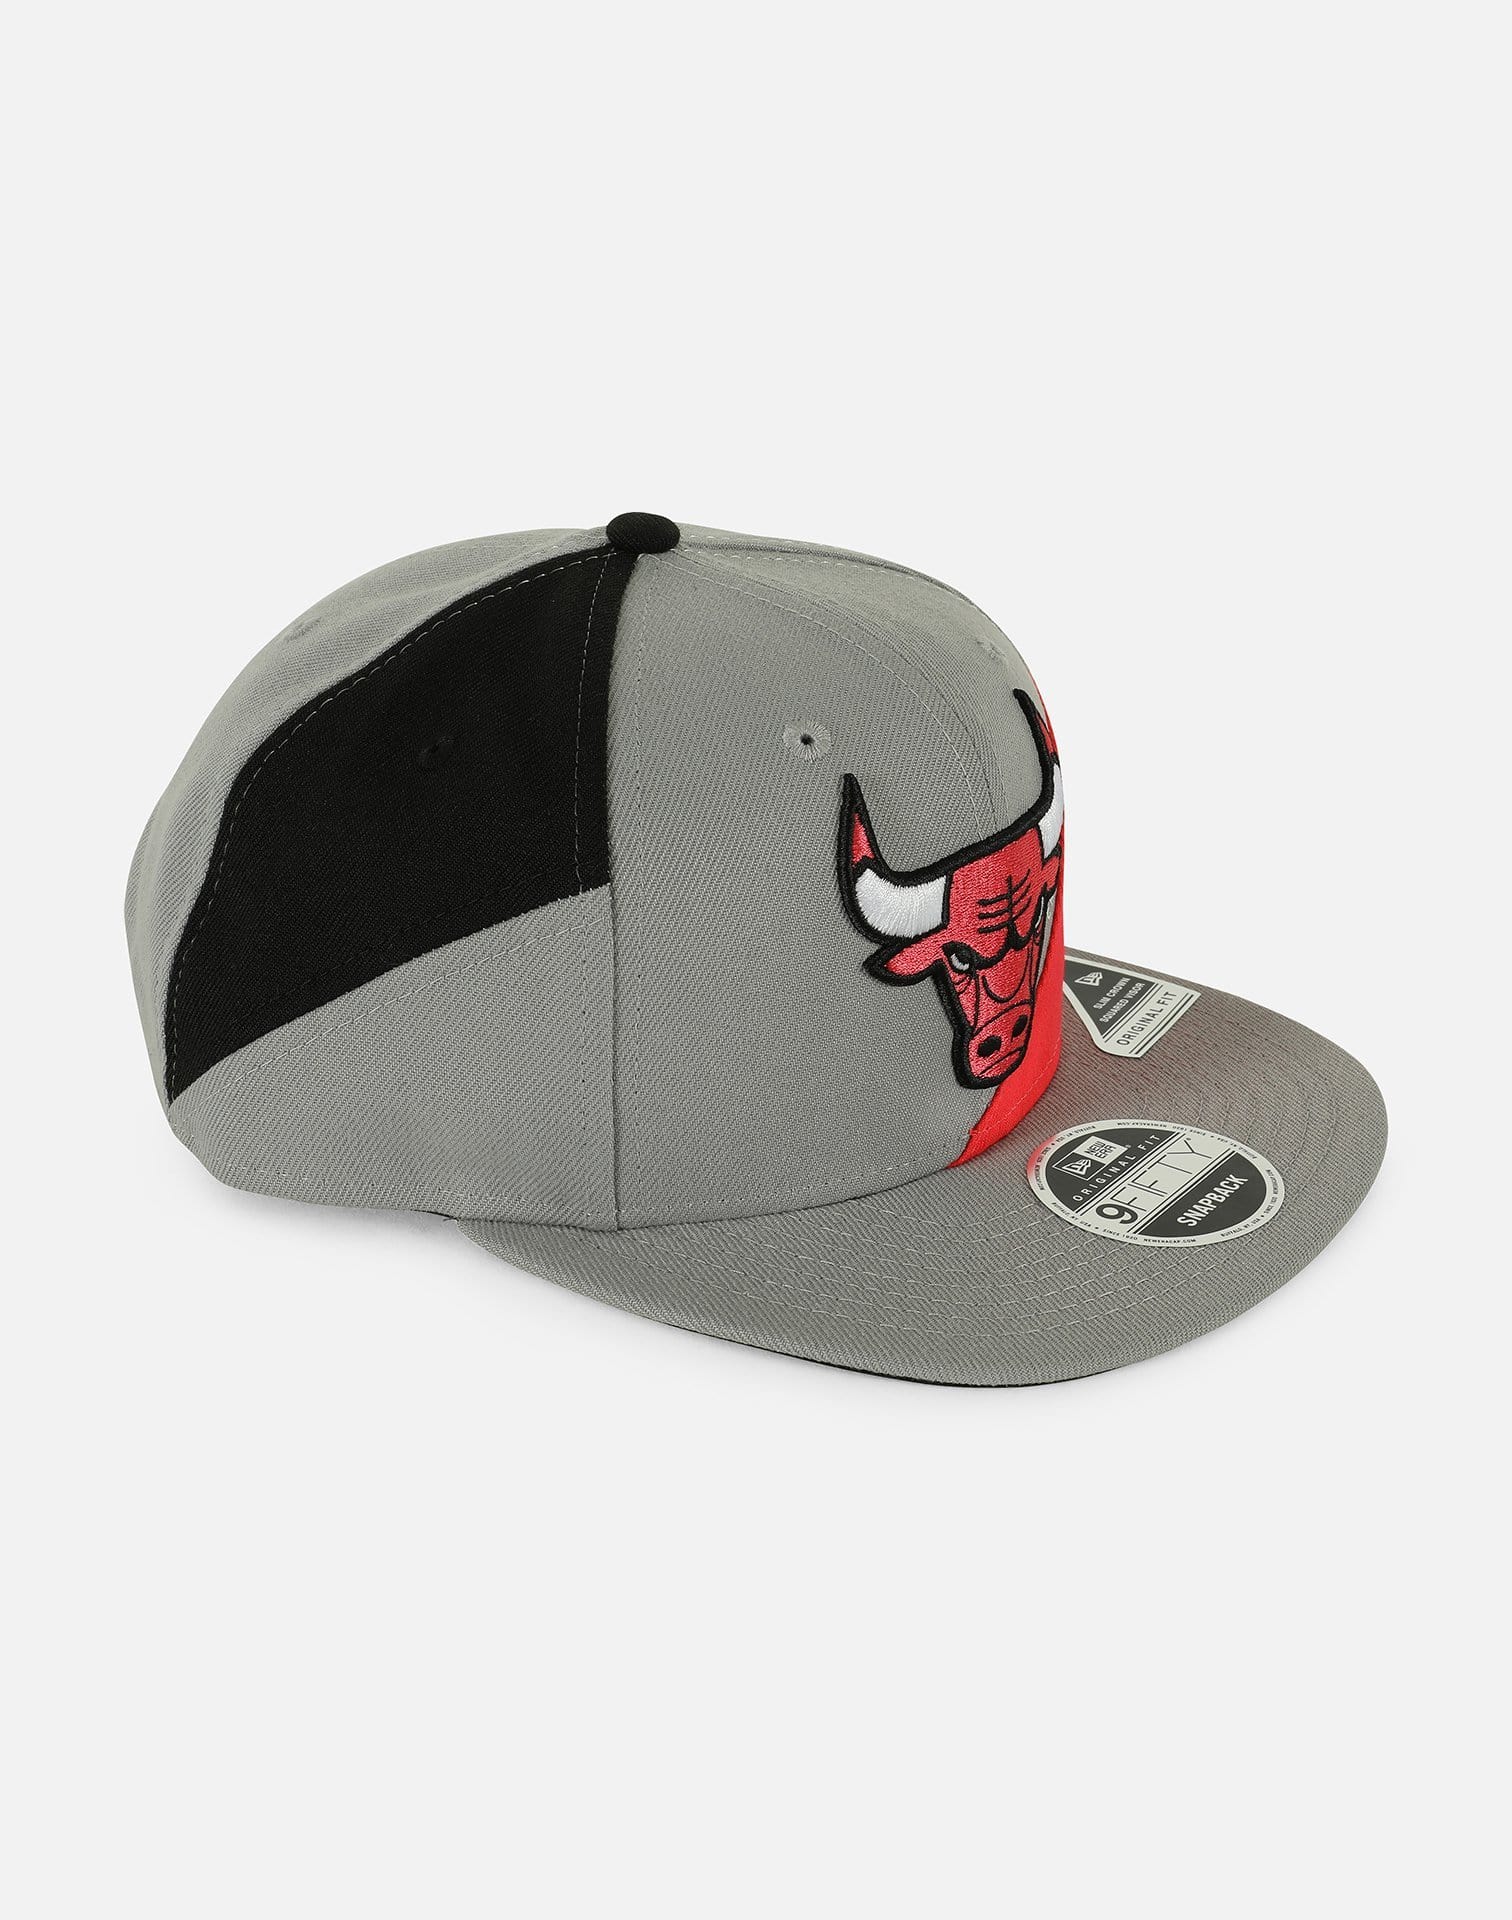 New Era NBA Chicago Bulls DTLR VILLA Exclusive Snapback Hat